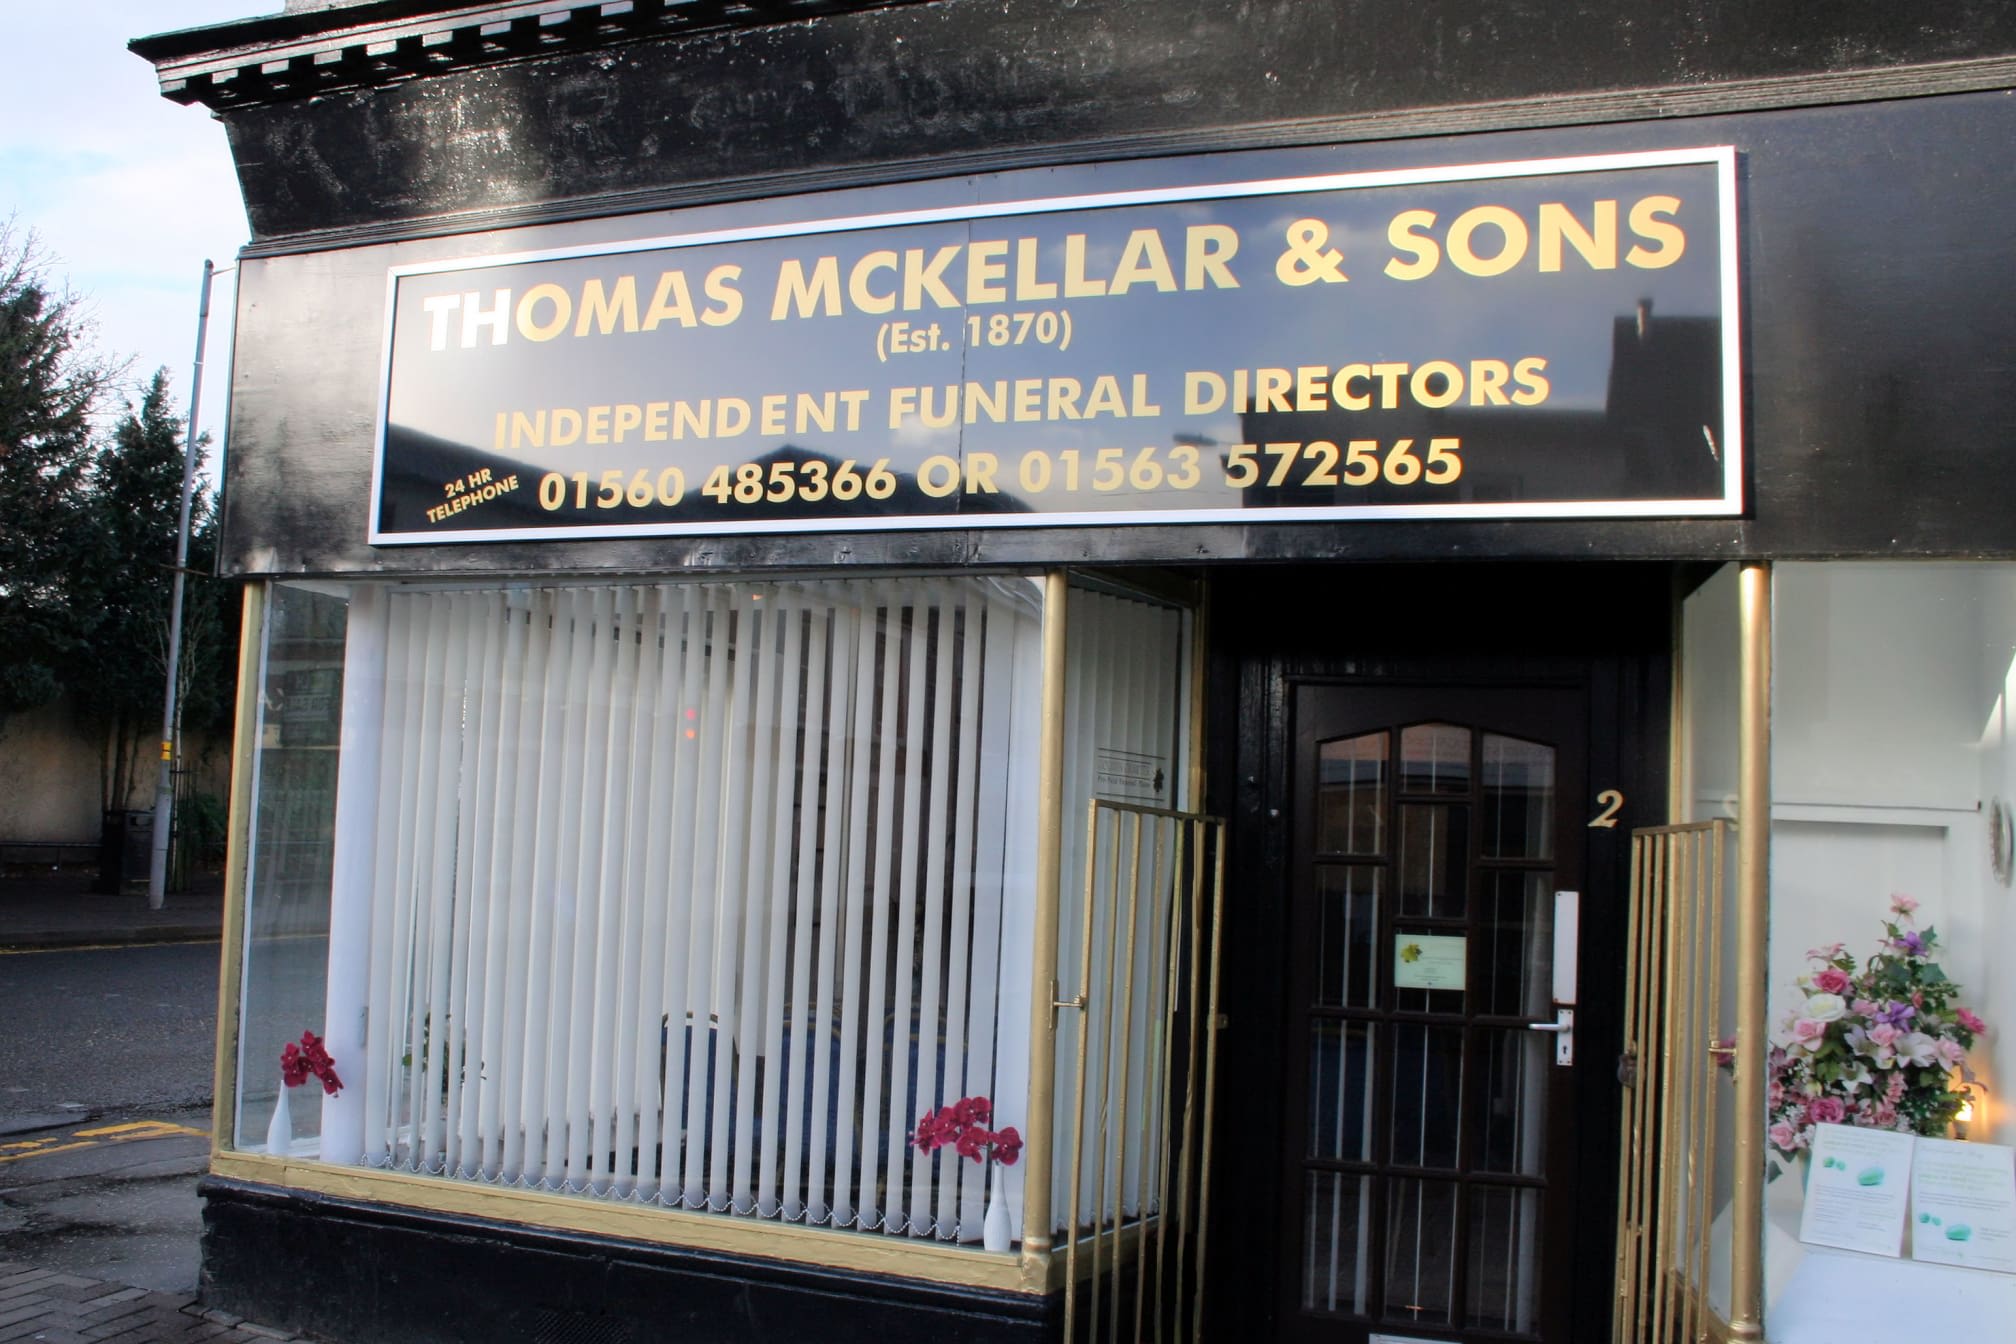 Thomas McKellar & Sons Galston 01563 624025